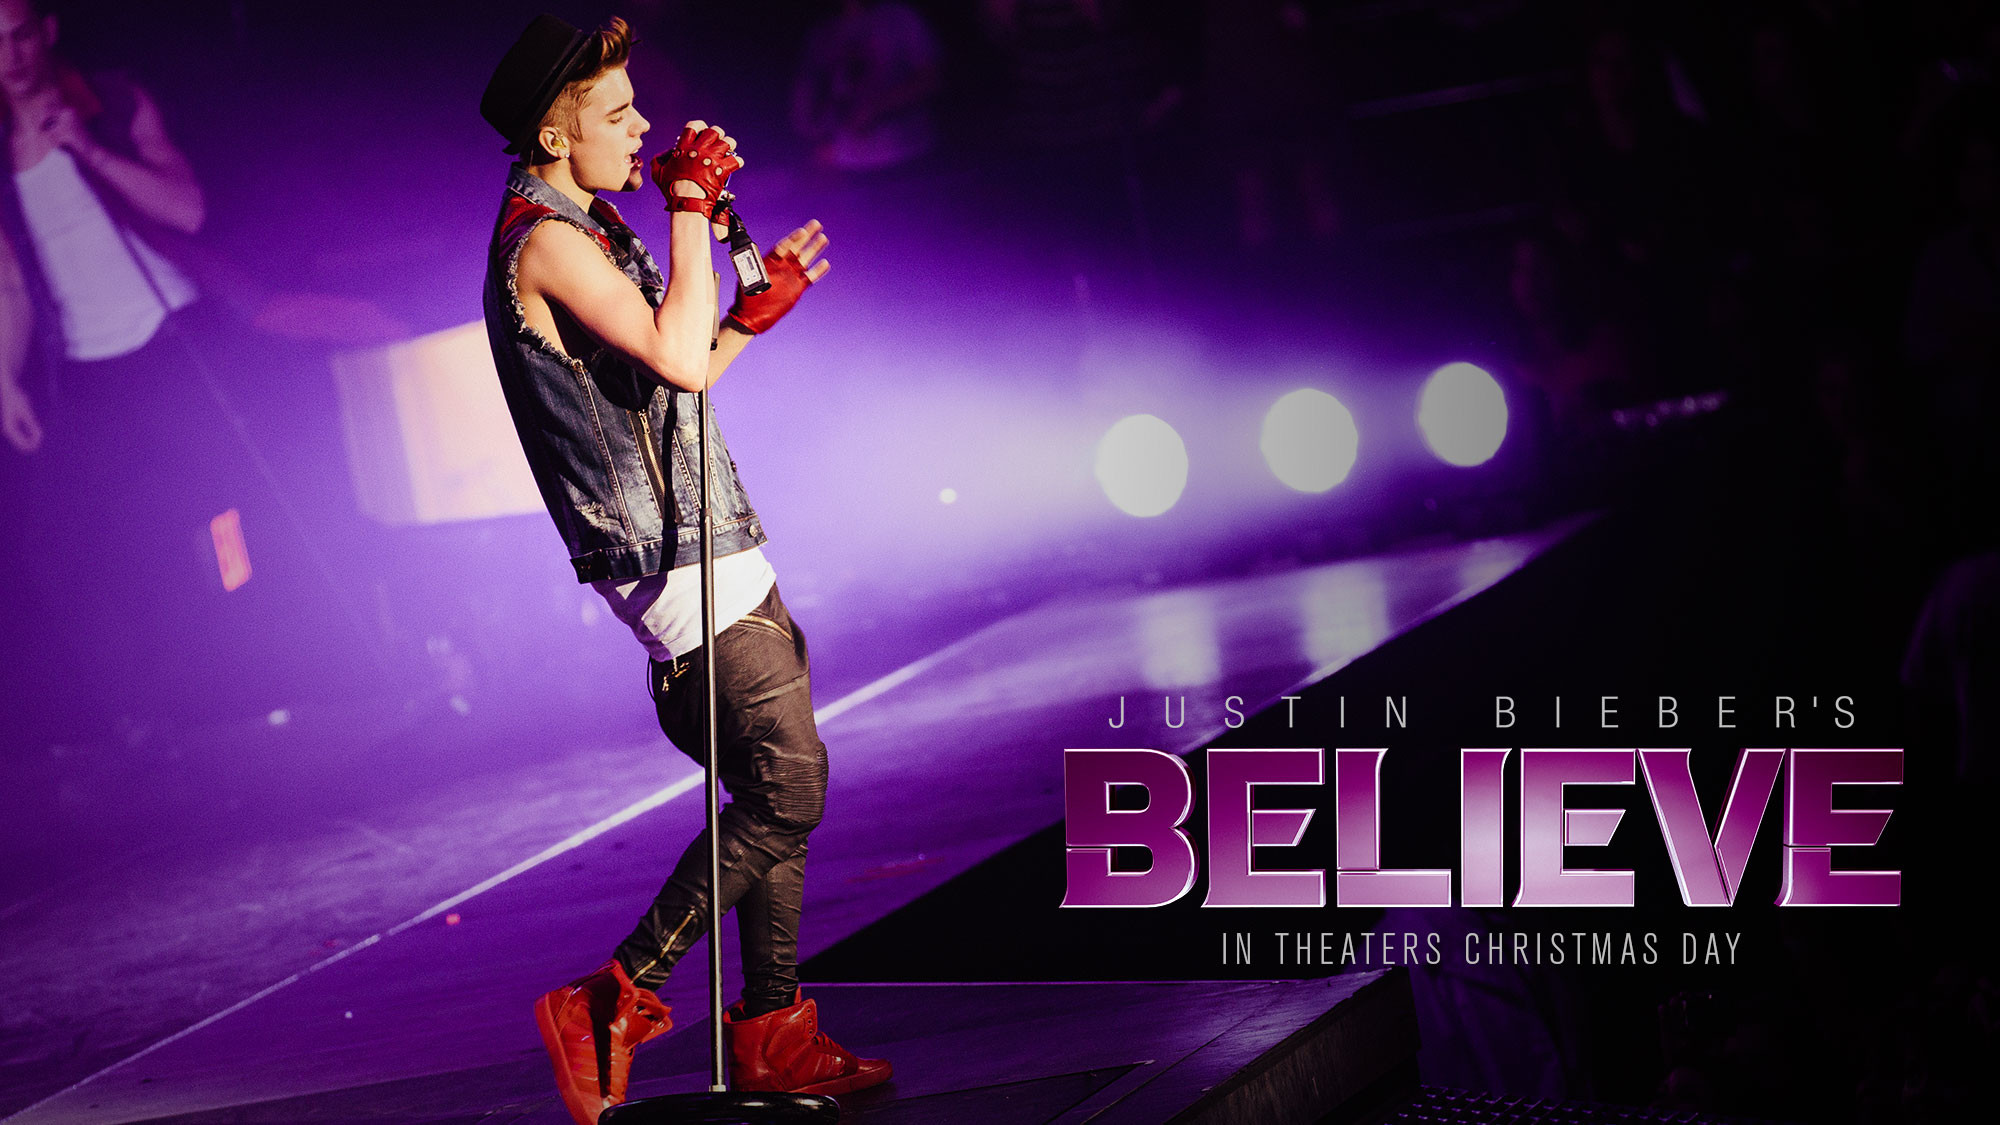 2000x1125 Justin Bieber's Believe wallpaper 2.jpg